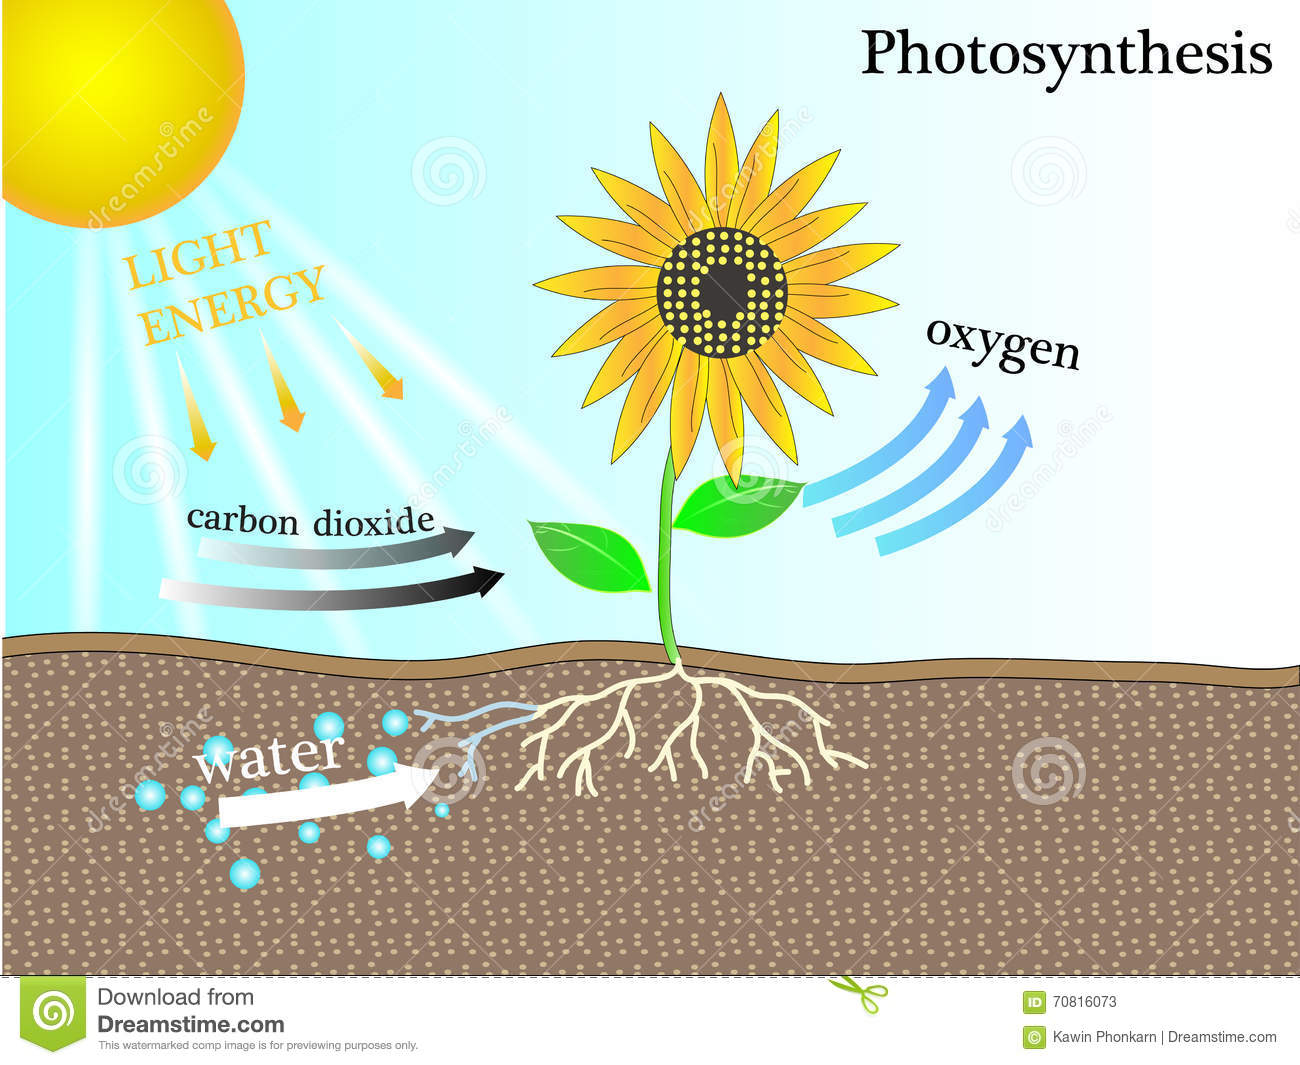 fotosíntesis 3